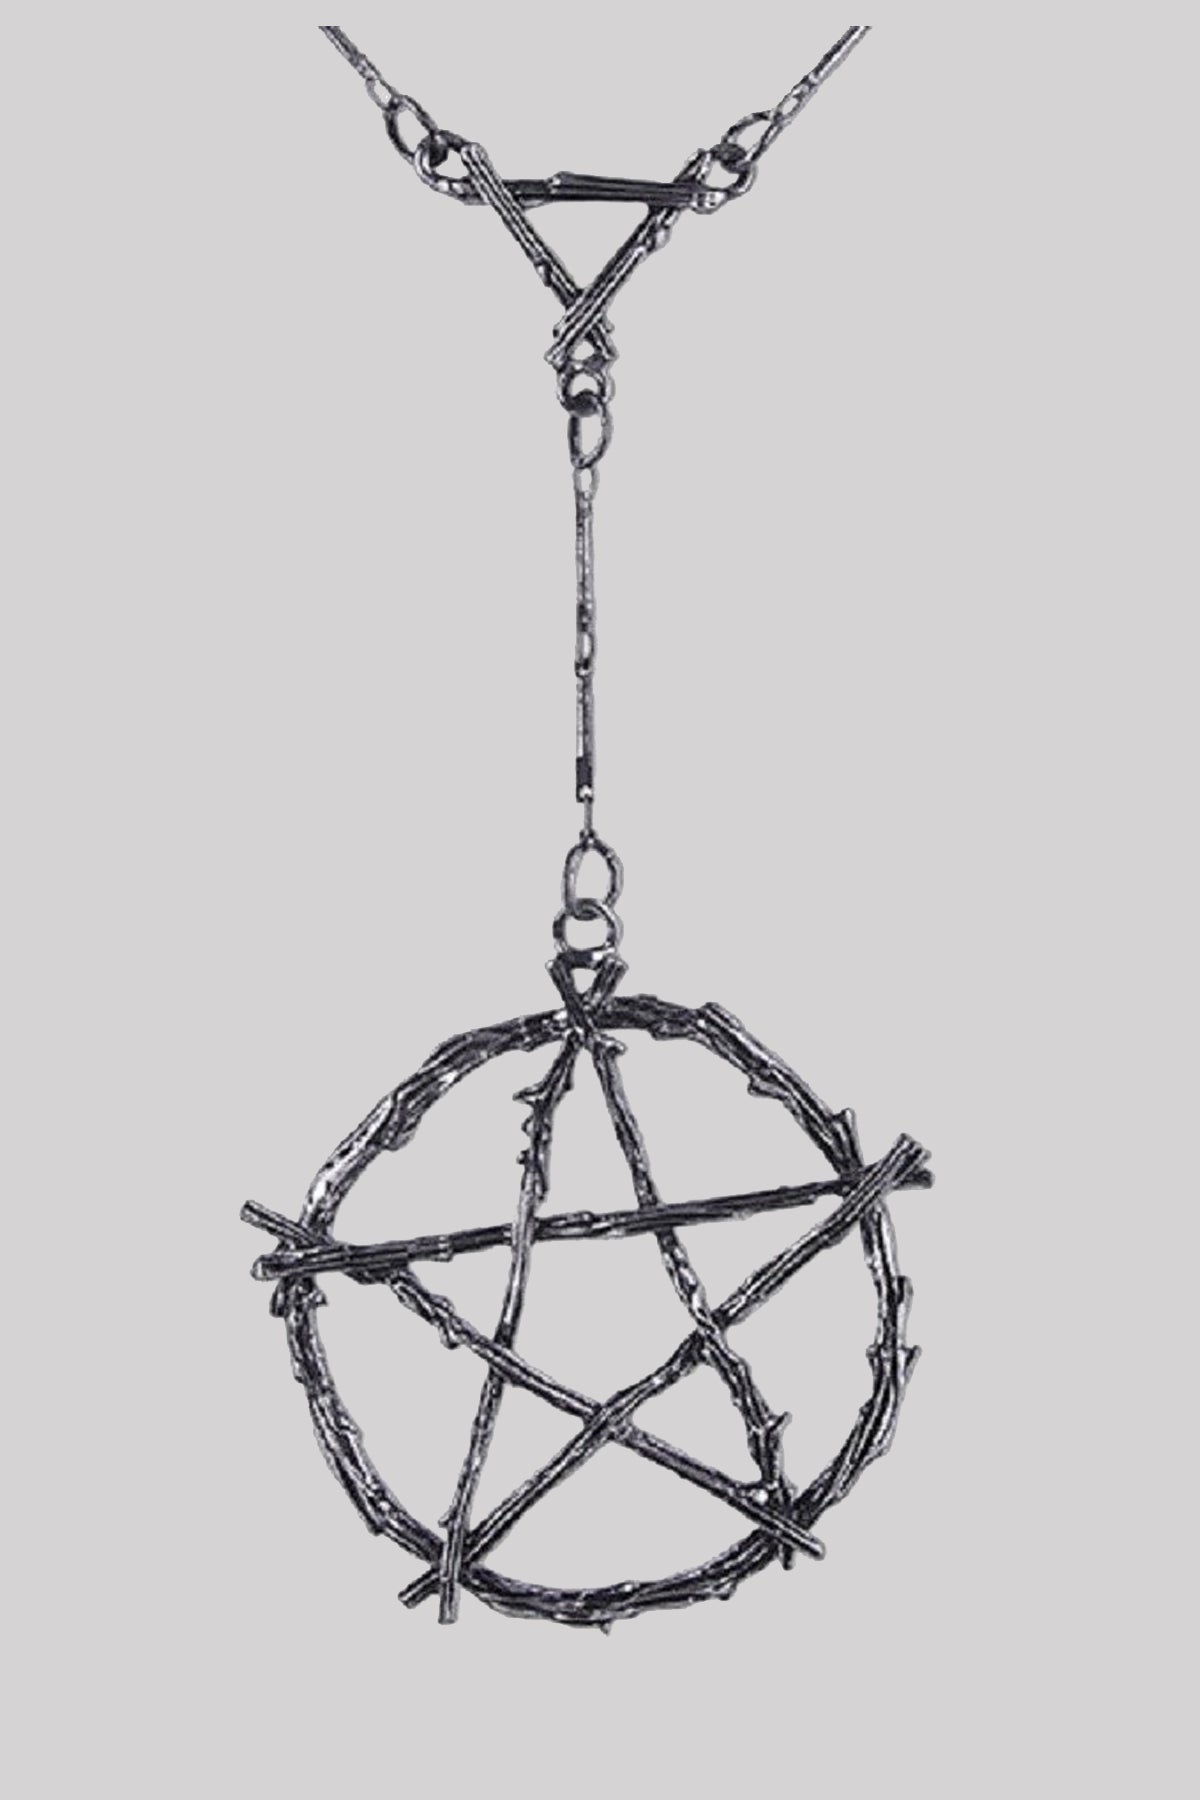 Restyle Branch Pentagram Symbol Occult Gothic Pendant Necklace